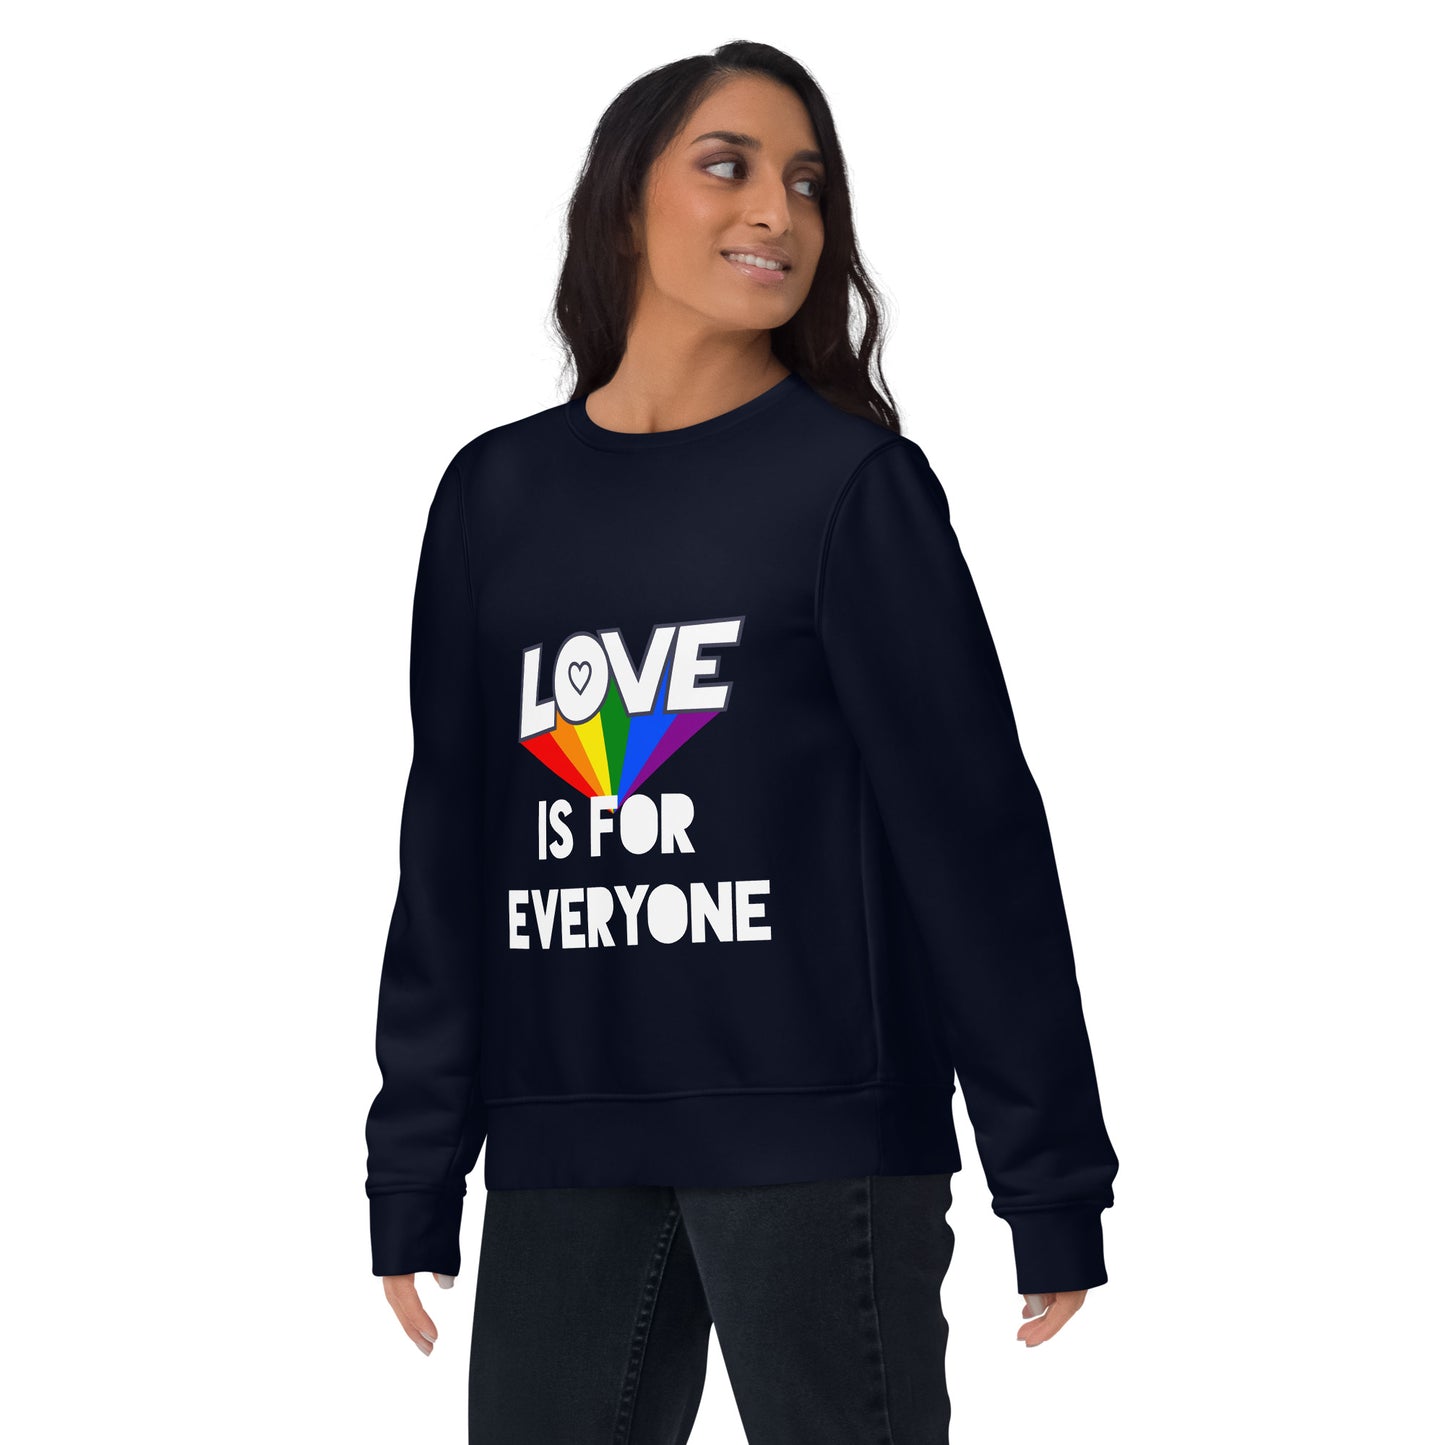 Love is for everyone, sweatshirt